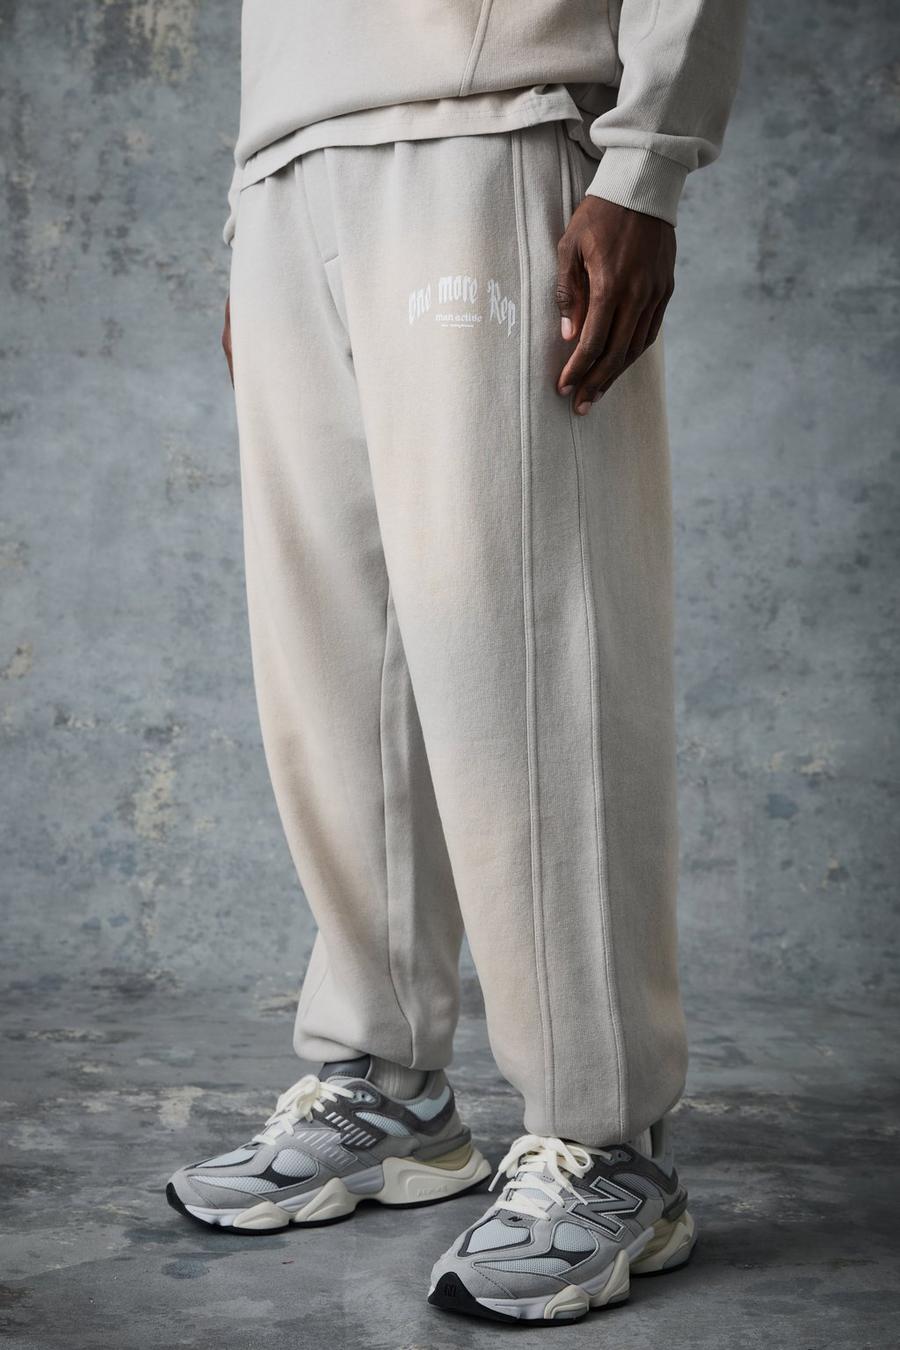 Pantaloni tuta Man Active vintage in slavato One More Rep, Grey